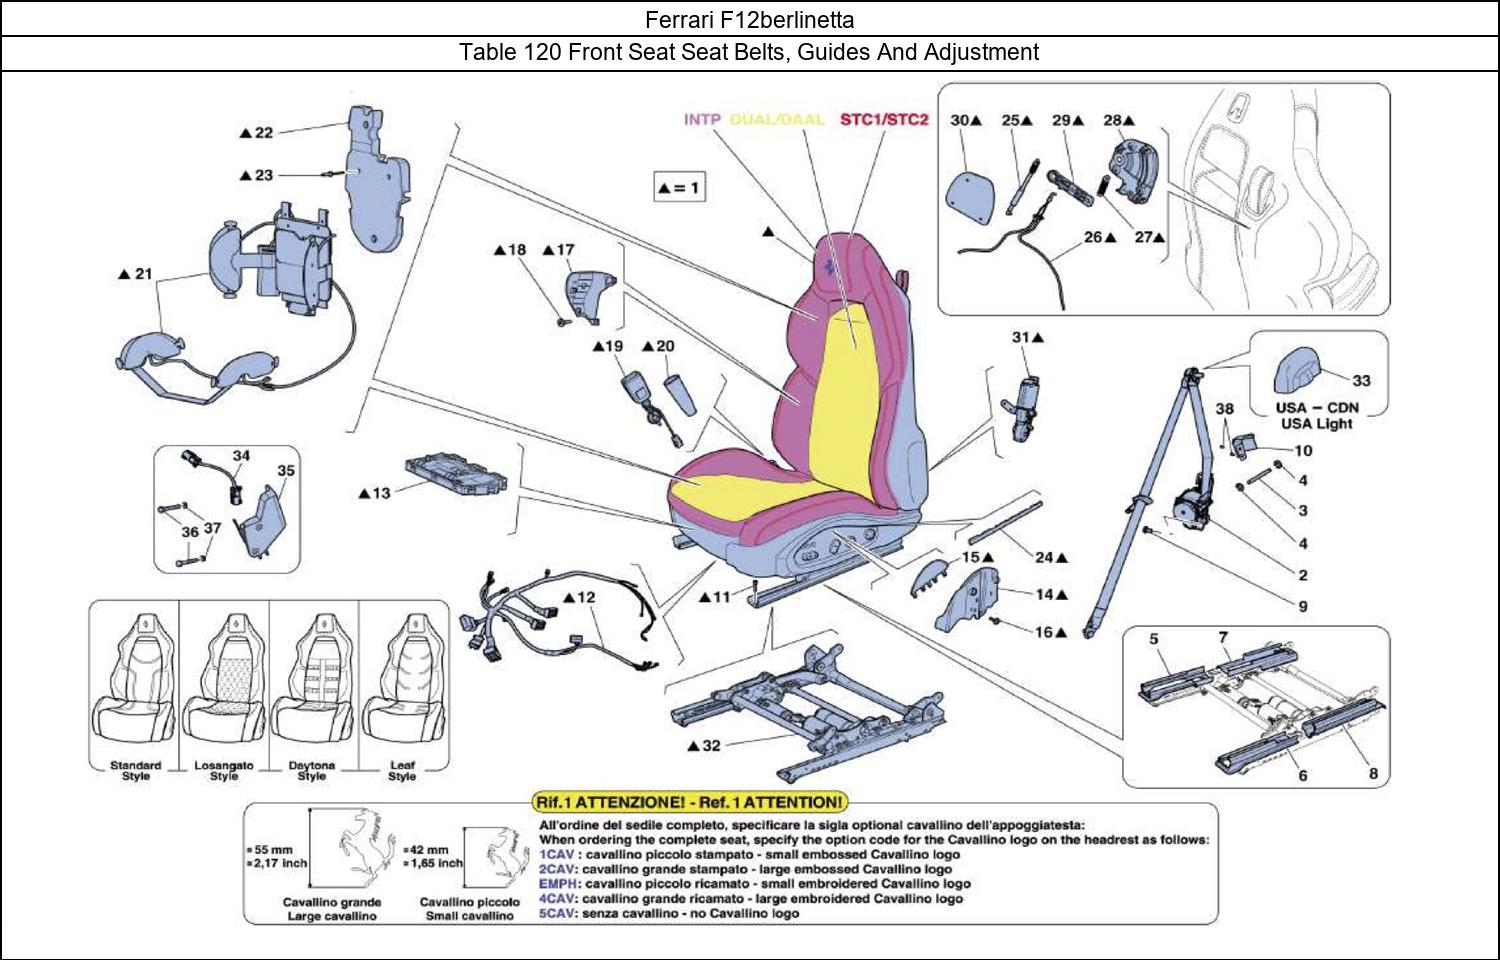 Ferrari Parts Ferrari F12berlinetta Table 120 Front Seat Seat Belts, Guides And Adjustment